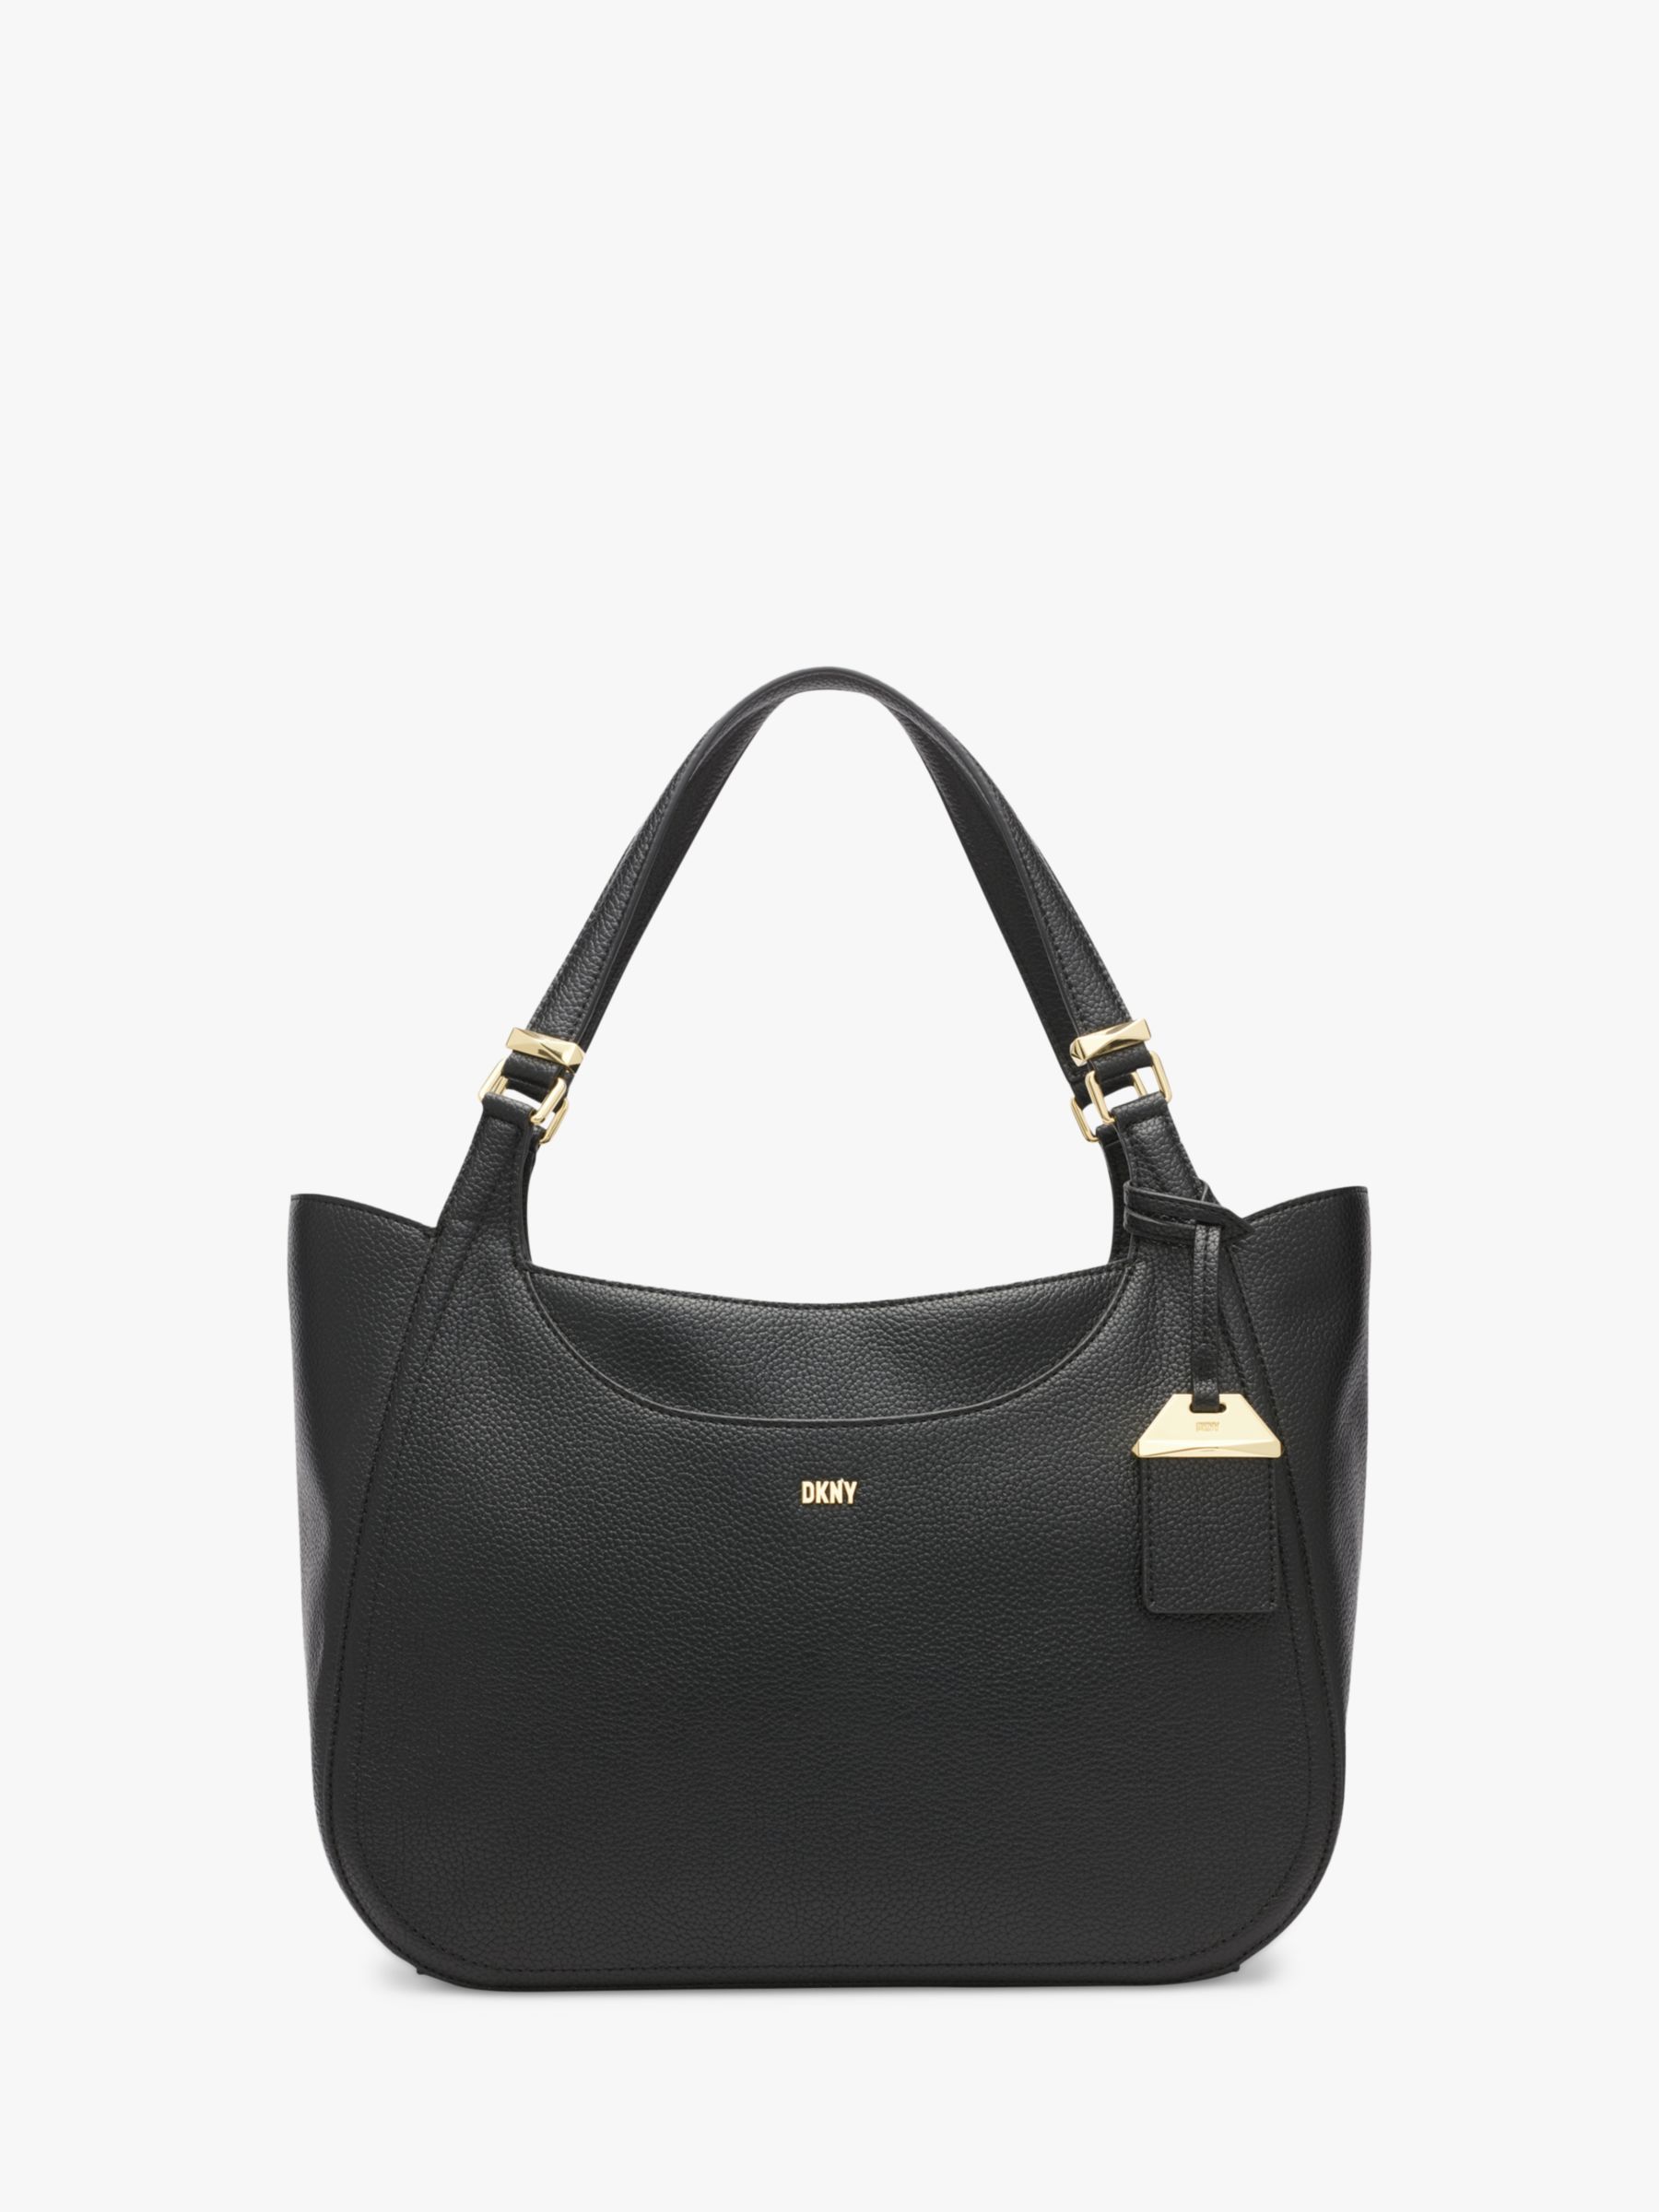 DKNY Barbara Shopper Bag, Black/Gold at John Lewis & Partners